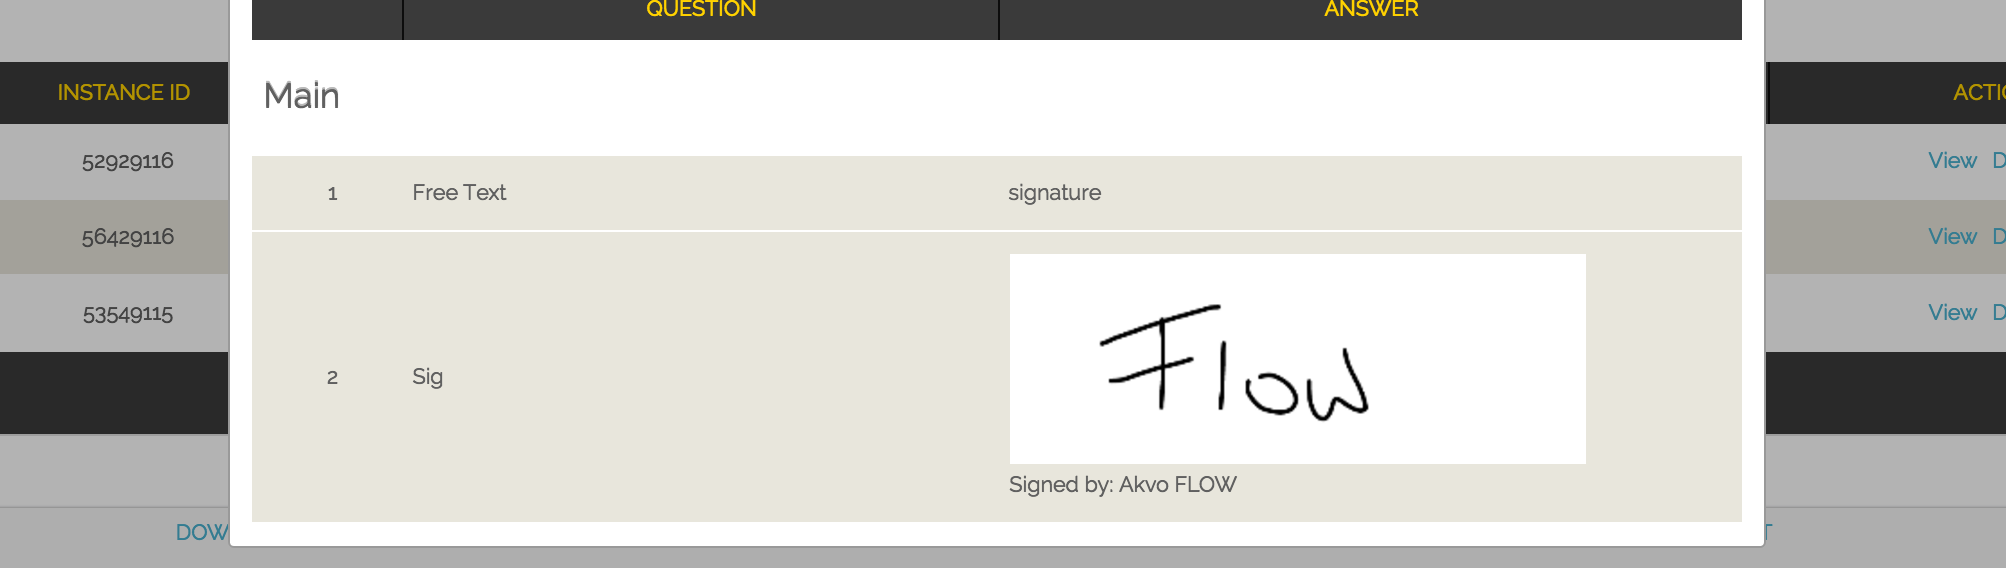 Capturing signatures on Akvo Flow